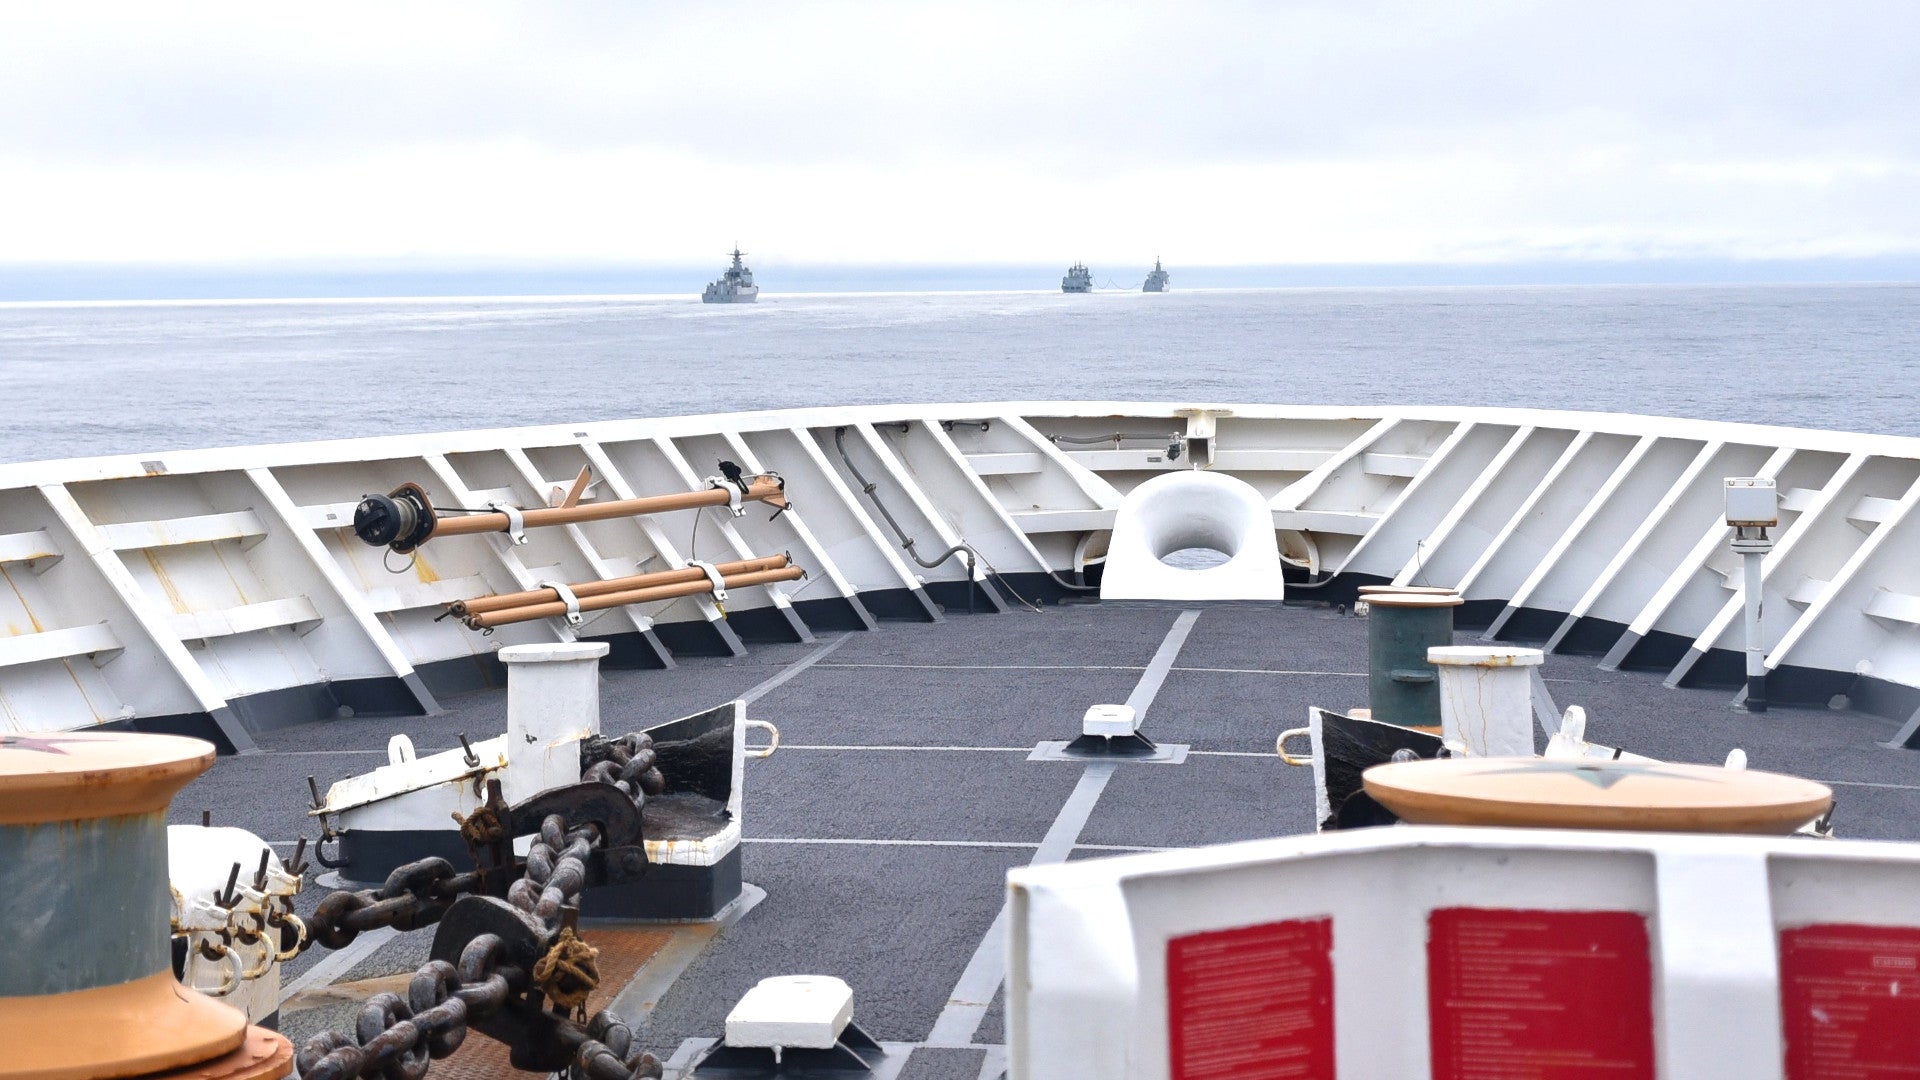 Chinese Warships Sailing Near Alaska’s Aleutian Islands Shadowed by U.S. Coast Guard